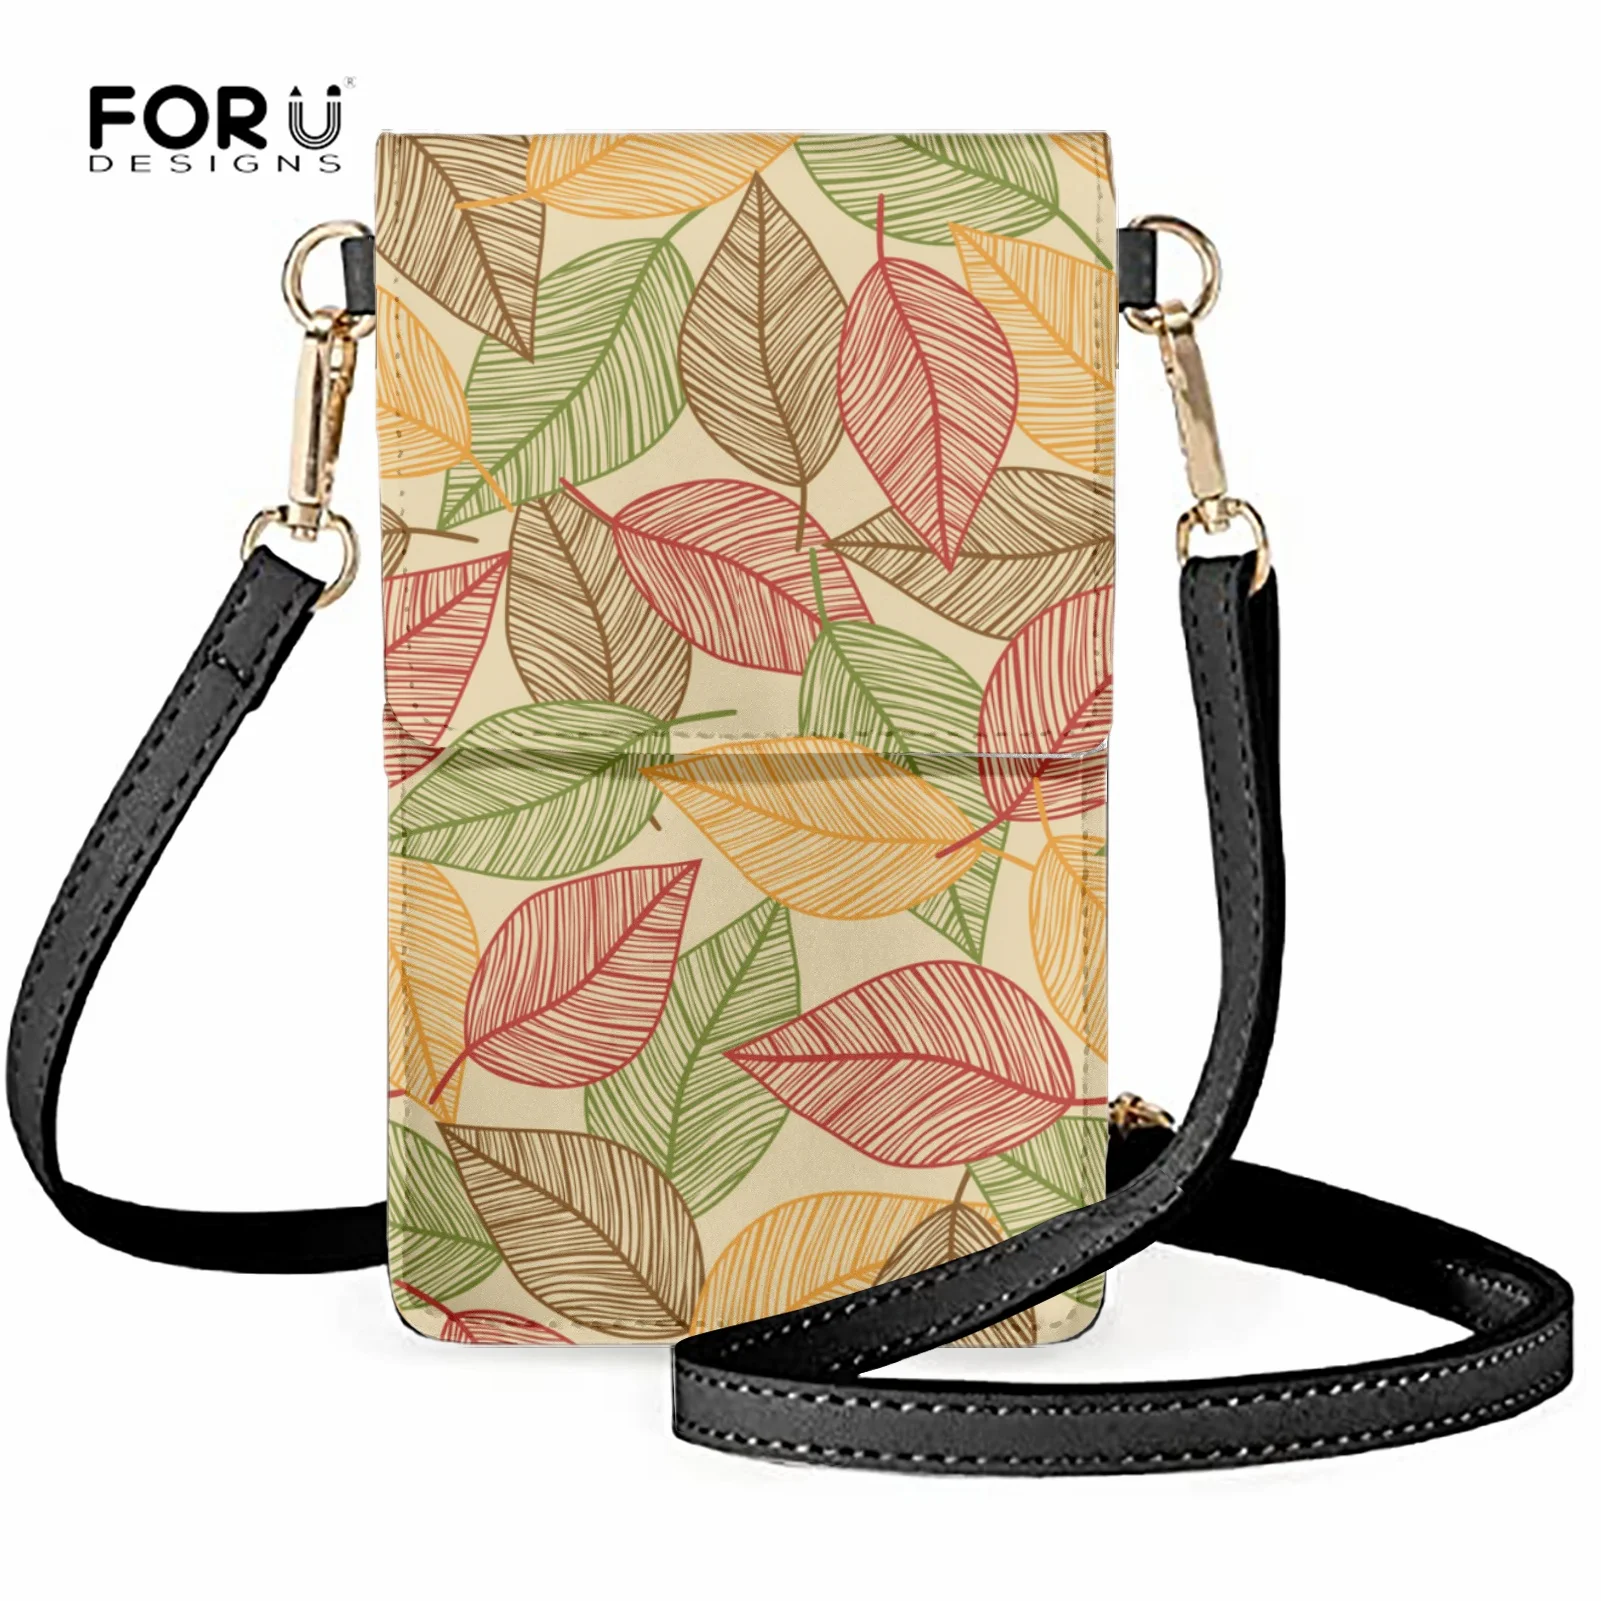 

FORUDESIGNS Women Mobile Phone Bag Colorful Leaf Design PU Leather Cellphone Purse Crossbody Messenger Bag Bolsa Feminina